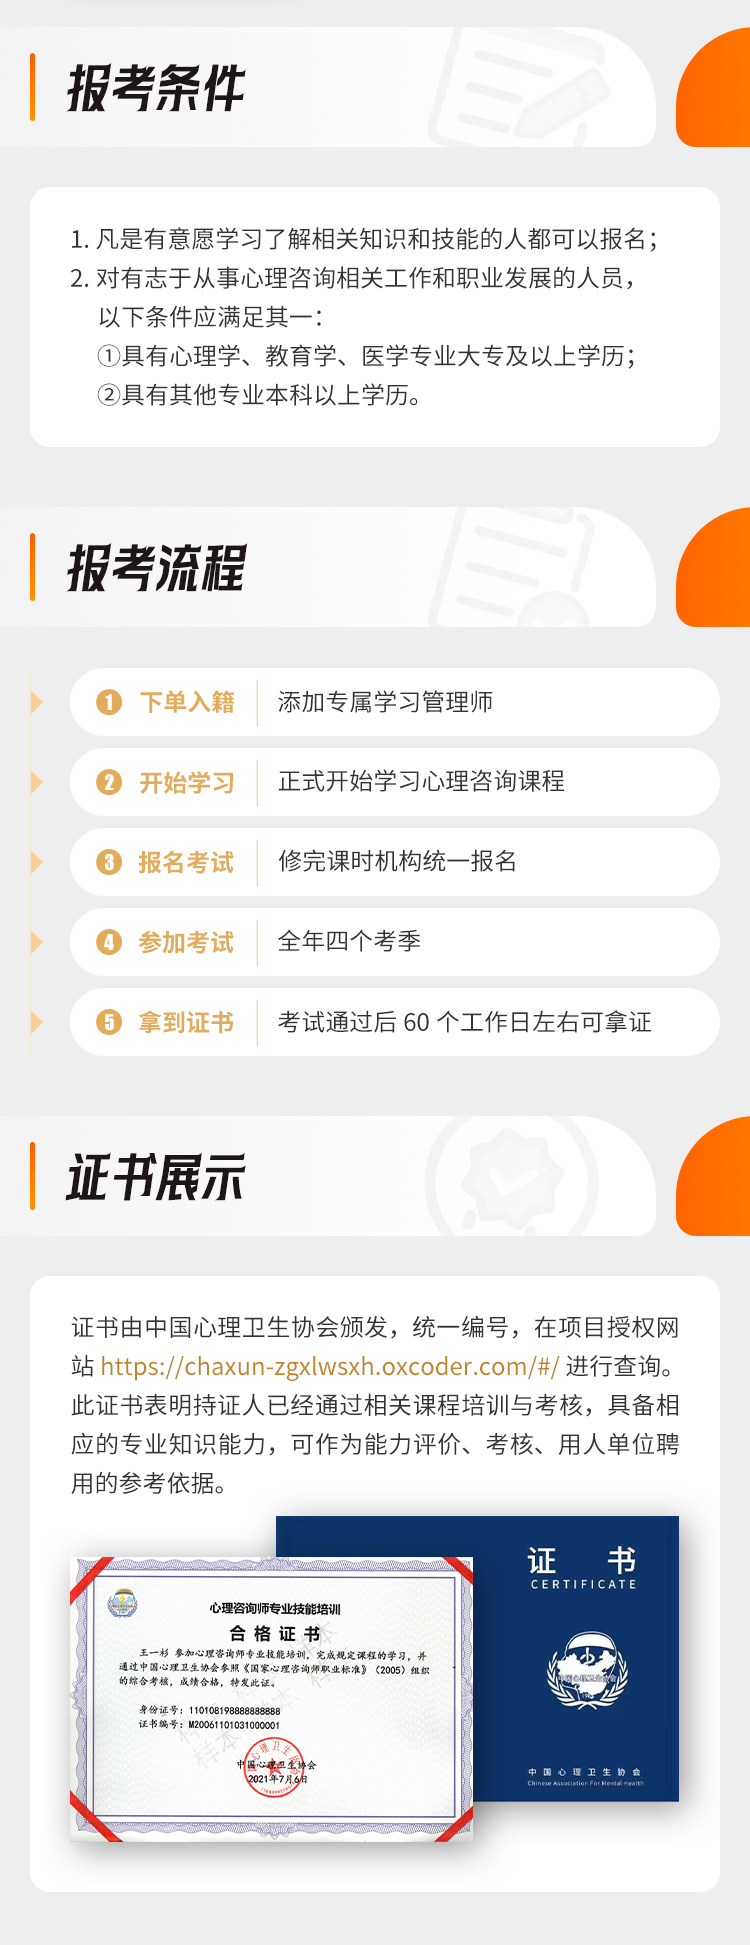 https://simg01.gaodunwangxiao.com/uploadfiles/product-center/202404/12/63e7d_20240412165224.jpg